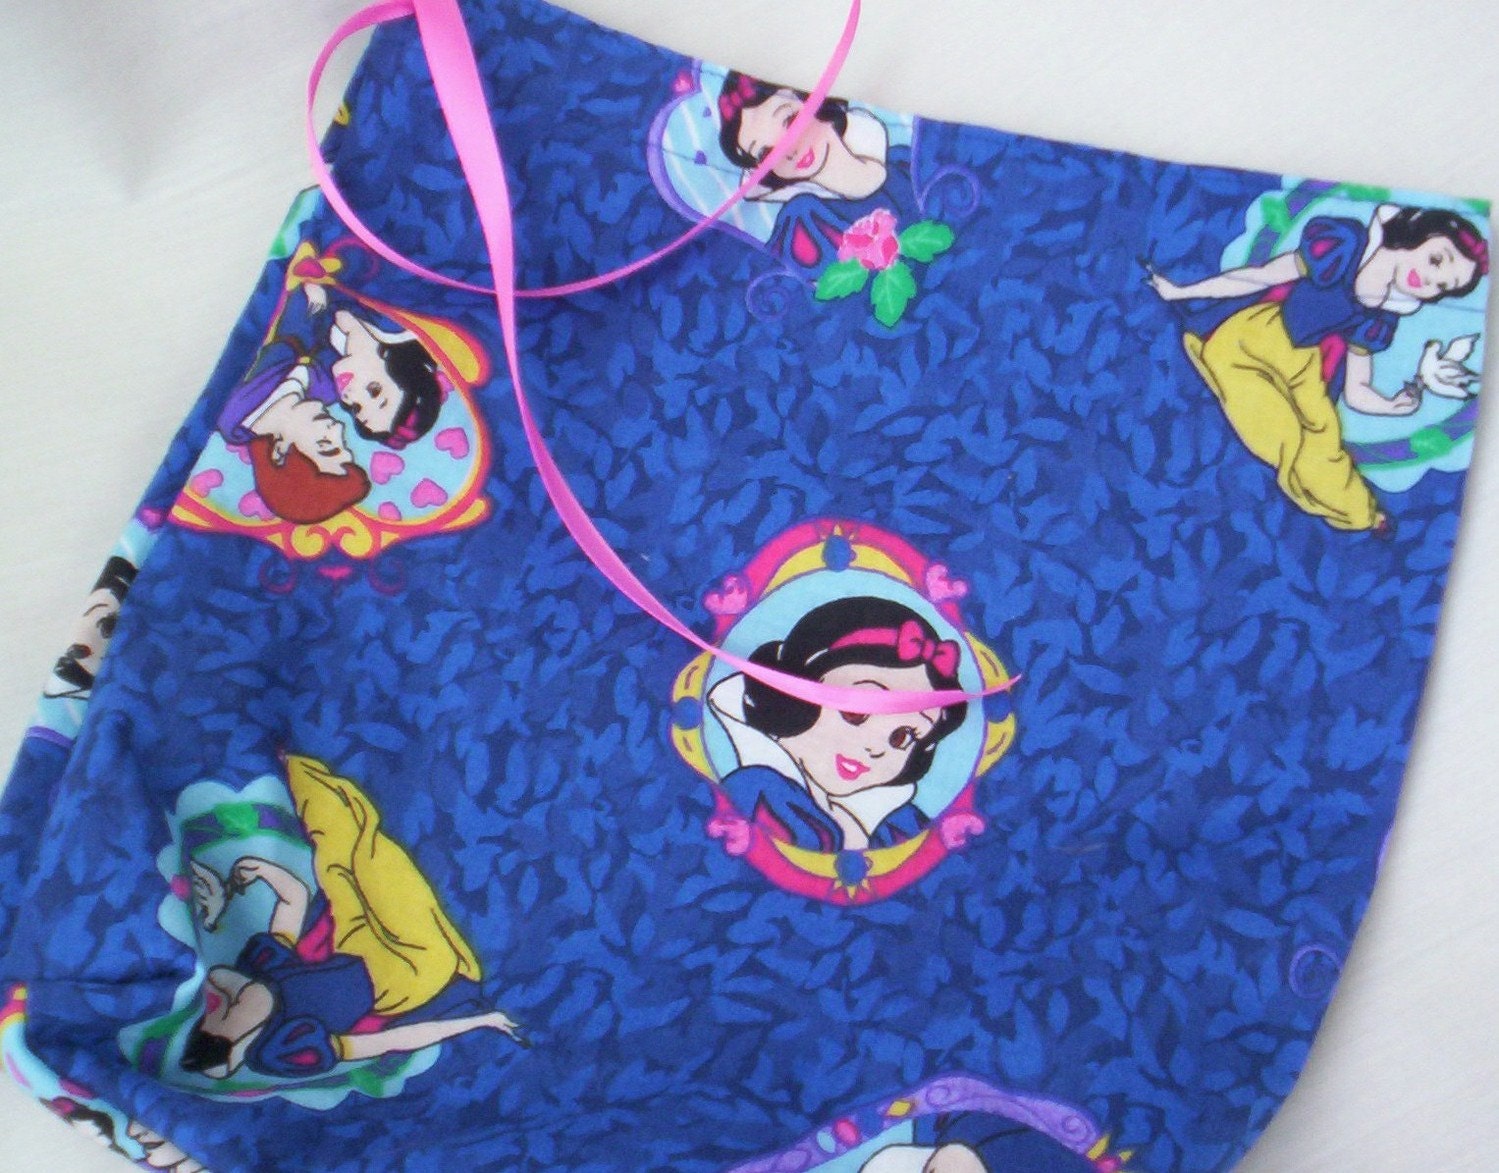 Snow White Fabric Gift Bag